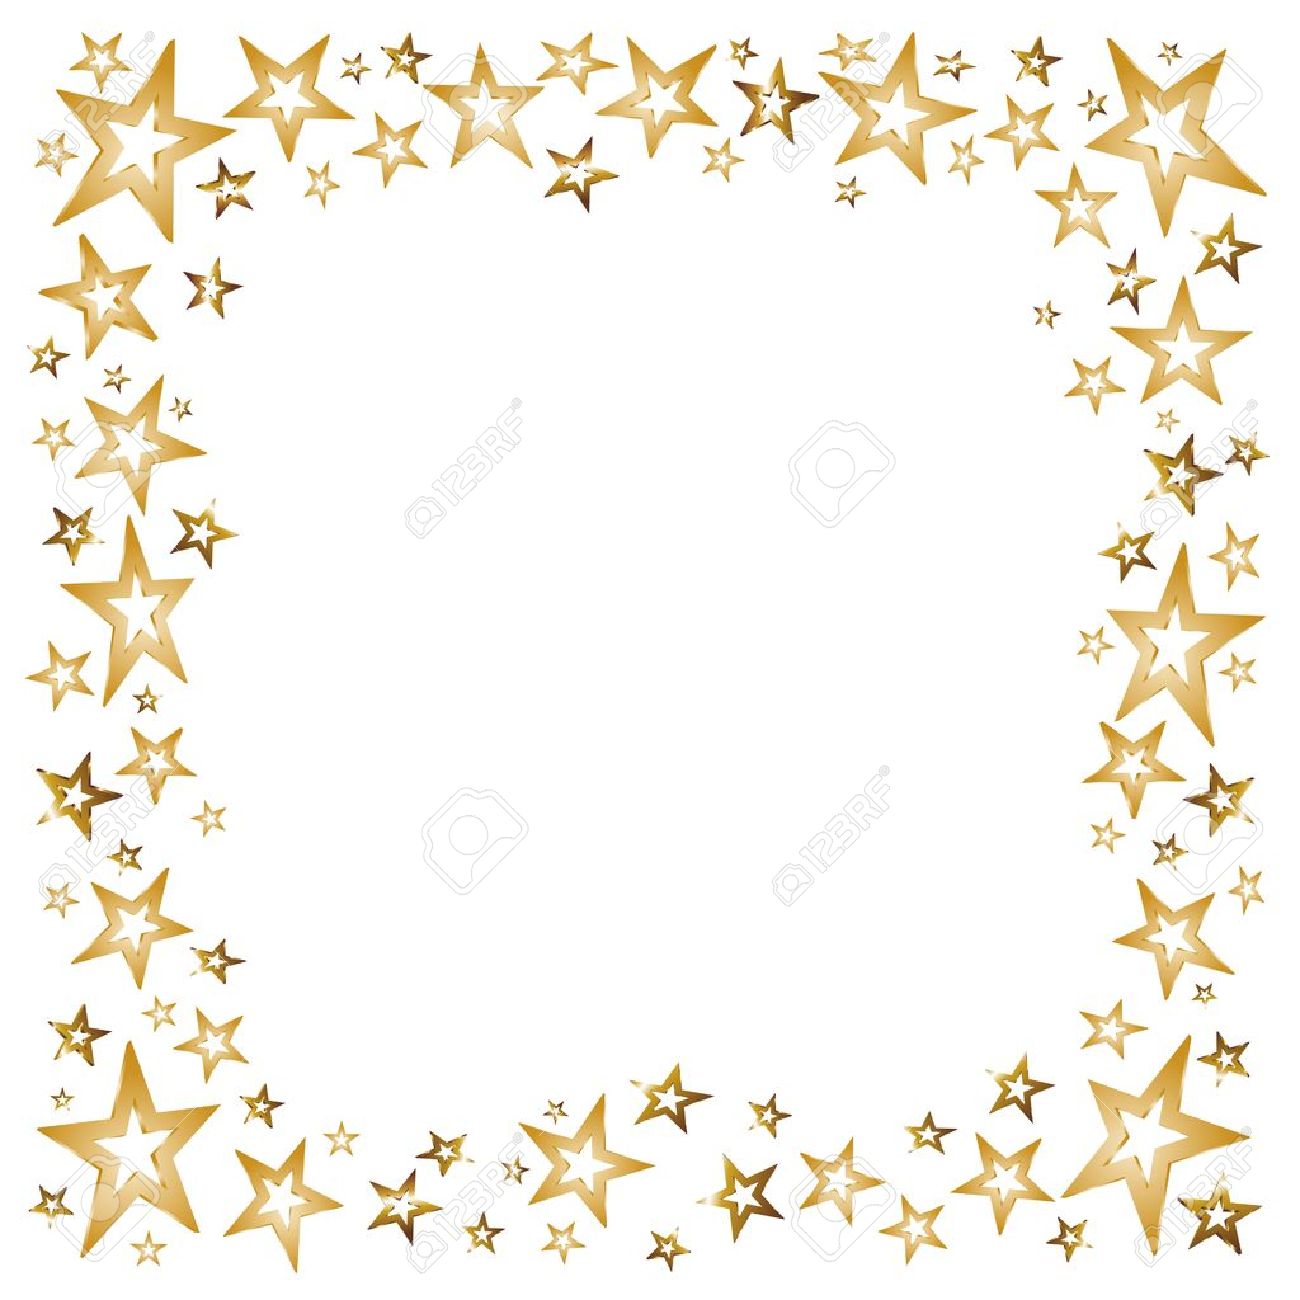 Free Gold Star Border Transparent, Download Free Gold Star Border ...